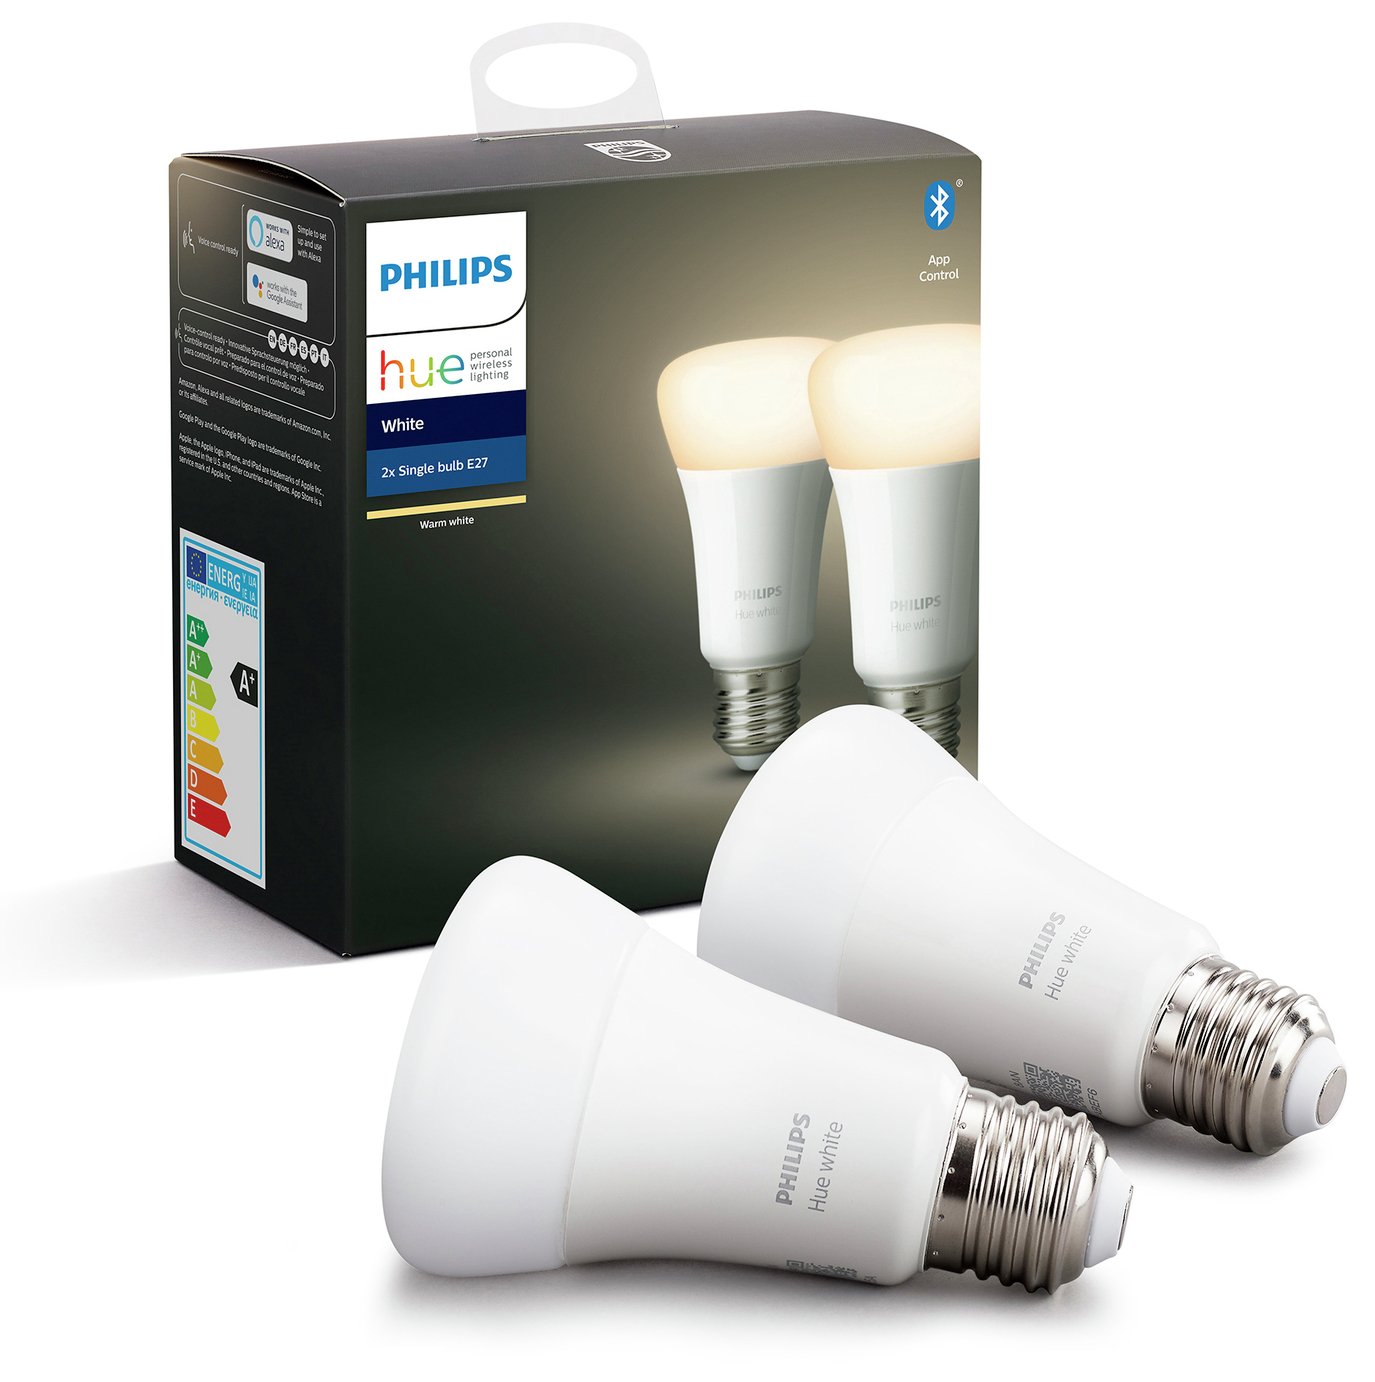 Philips Hue E27 White Smart Bulbs with Bluetooth -2 Pack